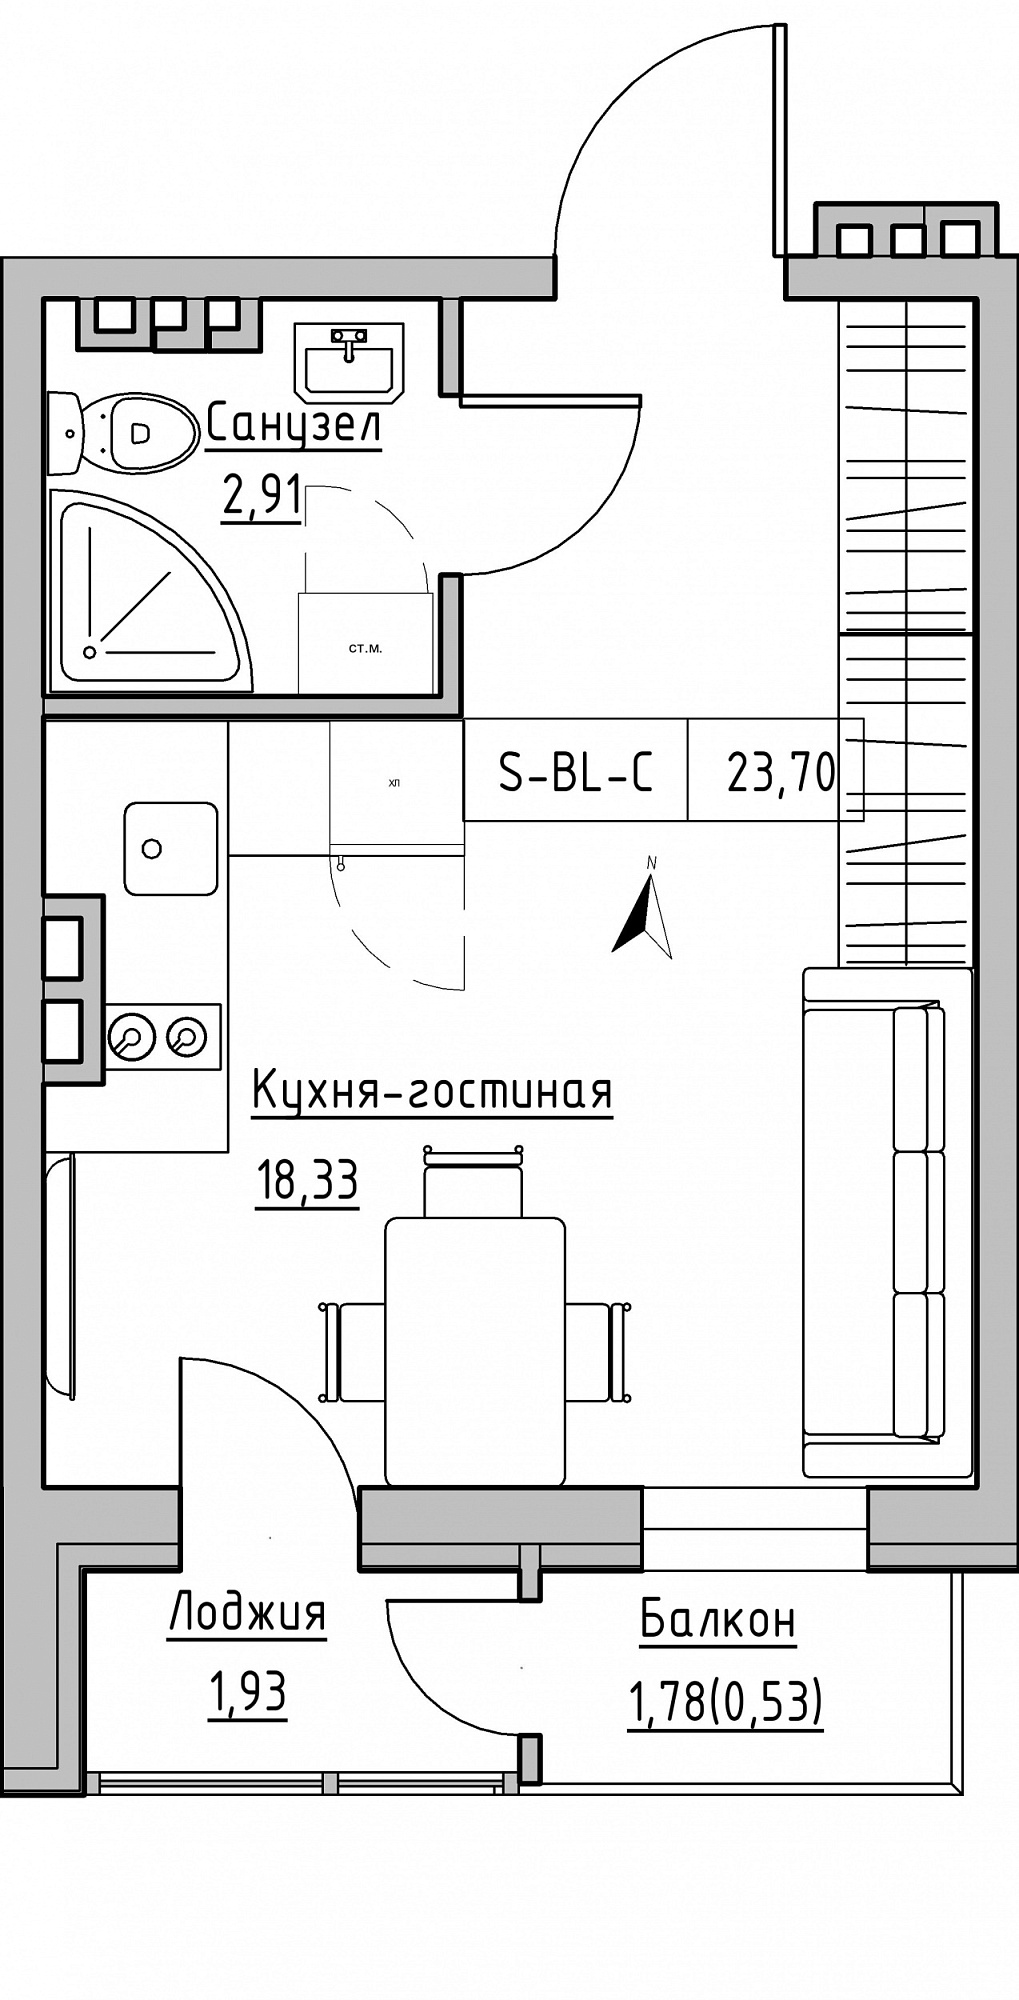 Planning Smart flats area 23.7m2, KS-024-04/0005.